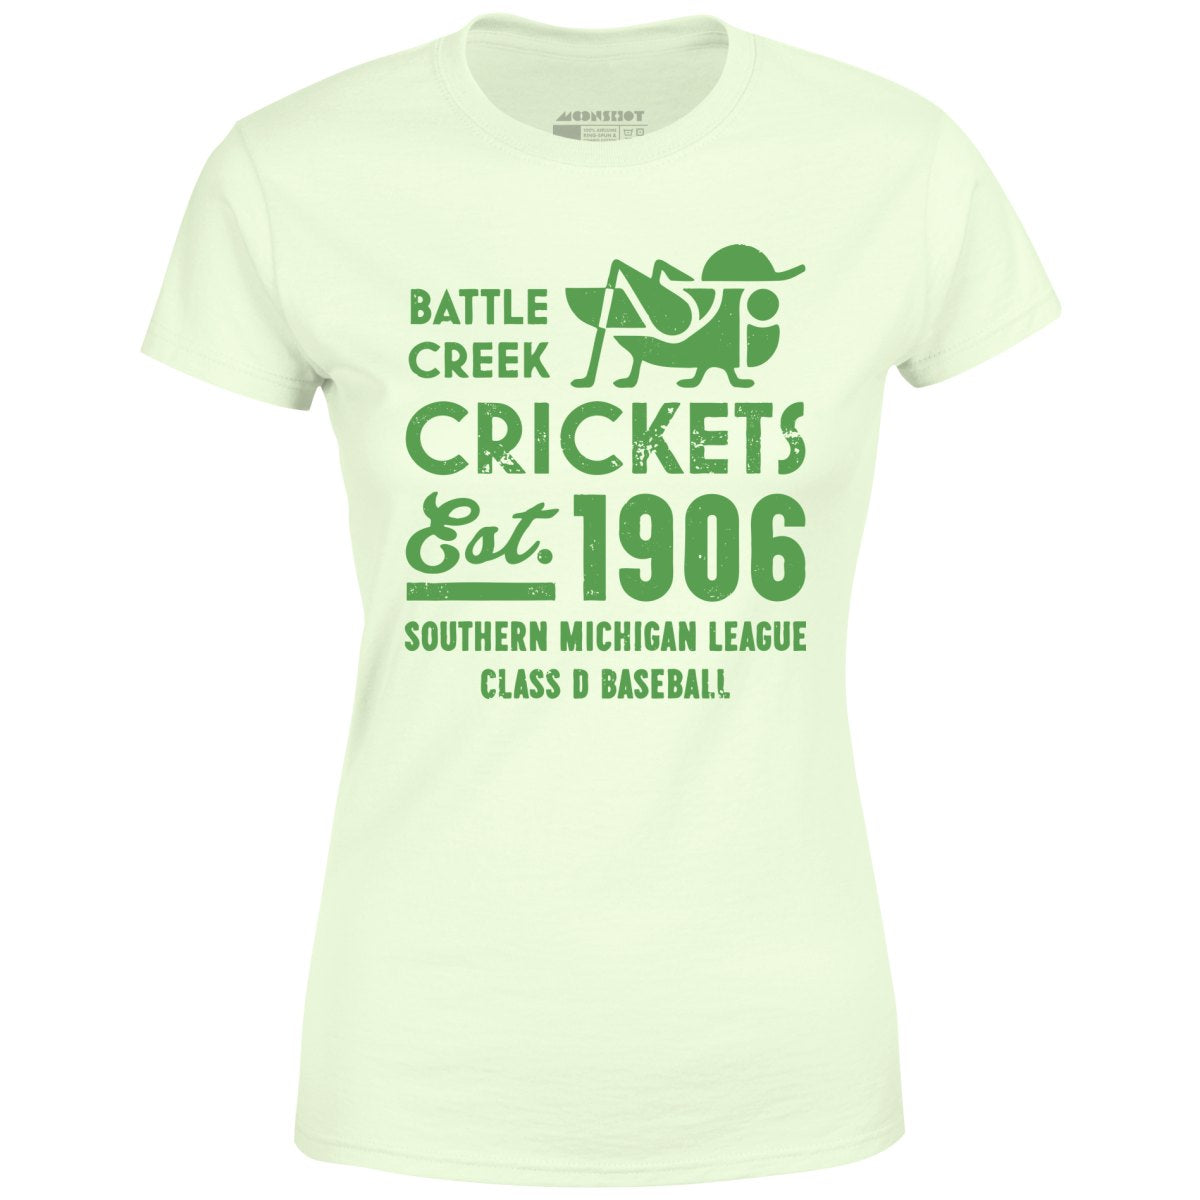 Battle Creek Crickets - Michigan - Vintage Defunct Baseball Teams - Women's T-Shirt